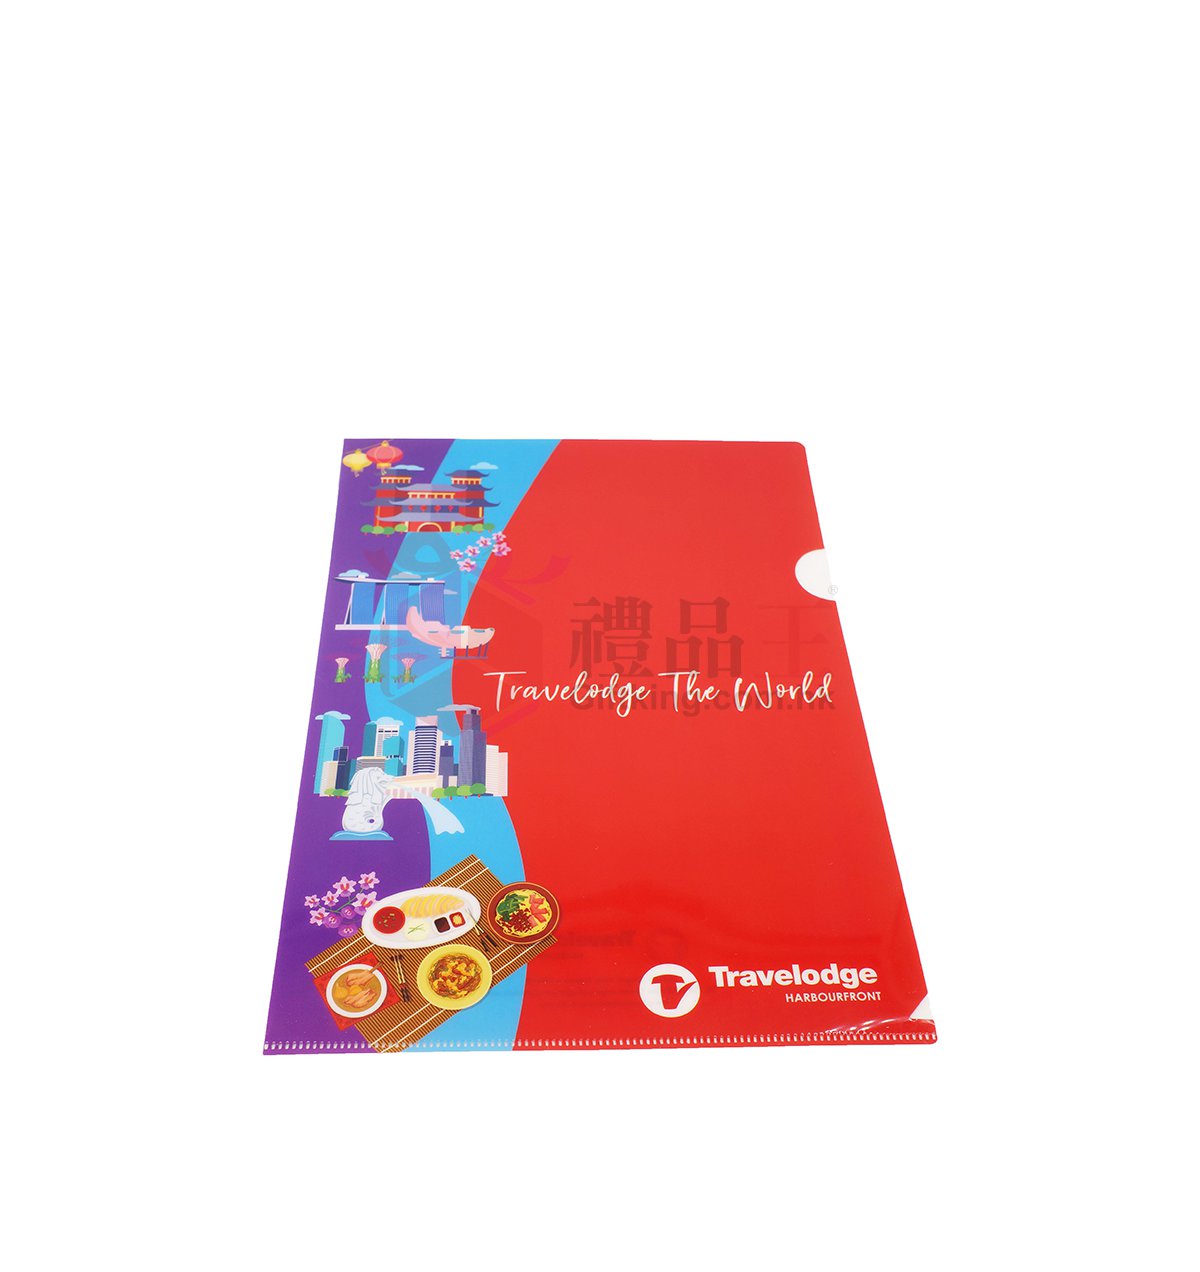 Travelodge A4 Folder (Stationery Gift)